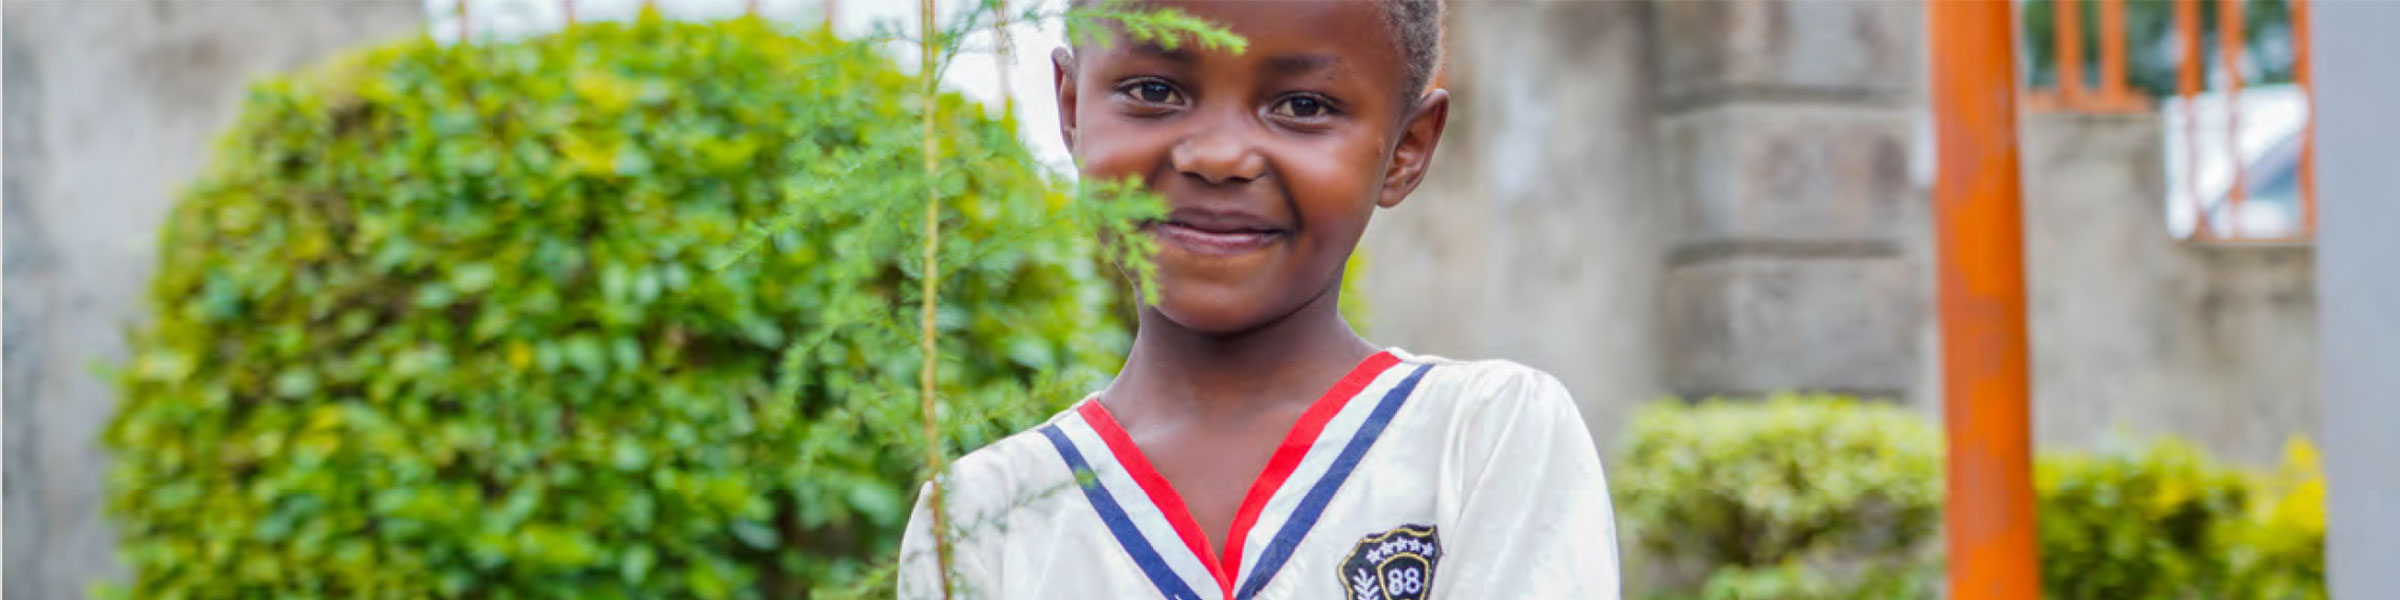 Child planting tree at Corner of Hope, Kenya